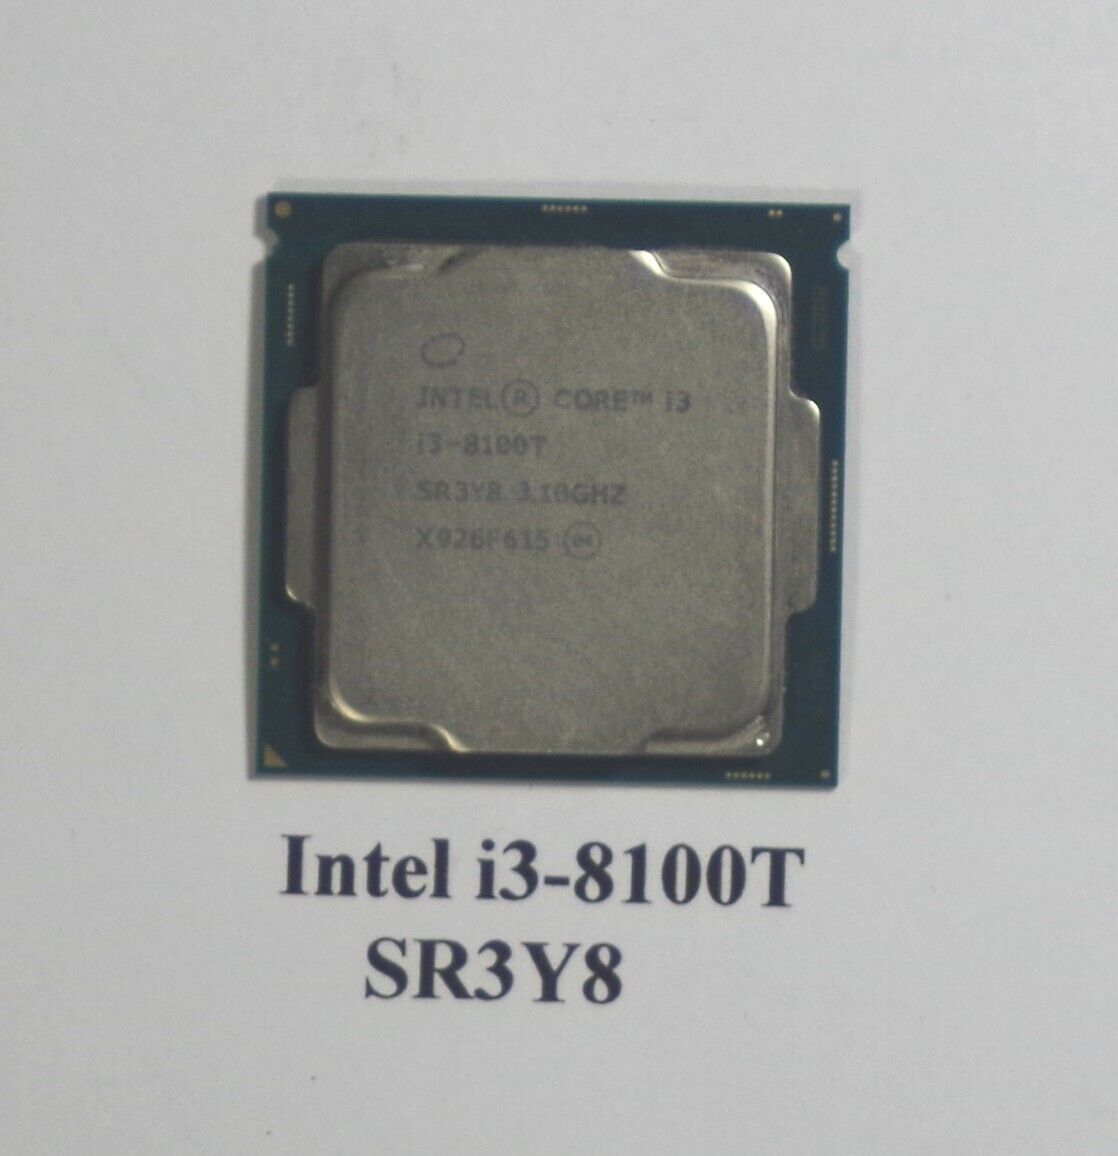 Intel Core i3-8100T SR3Y8 CPU Processor